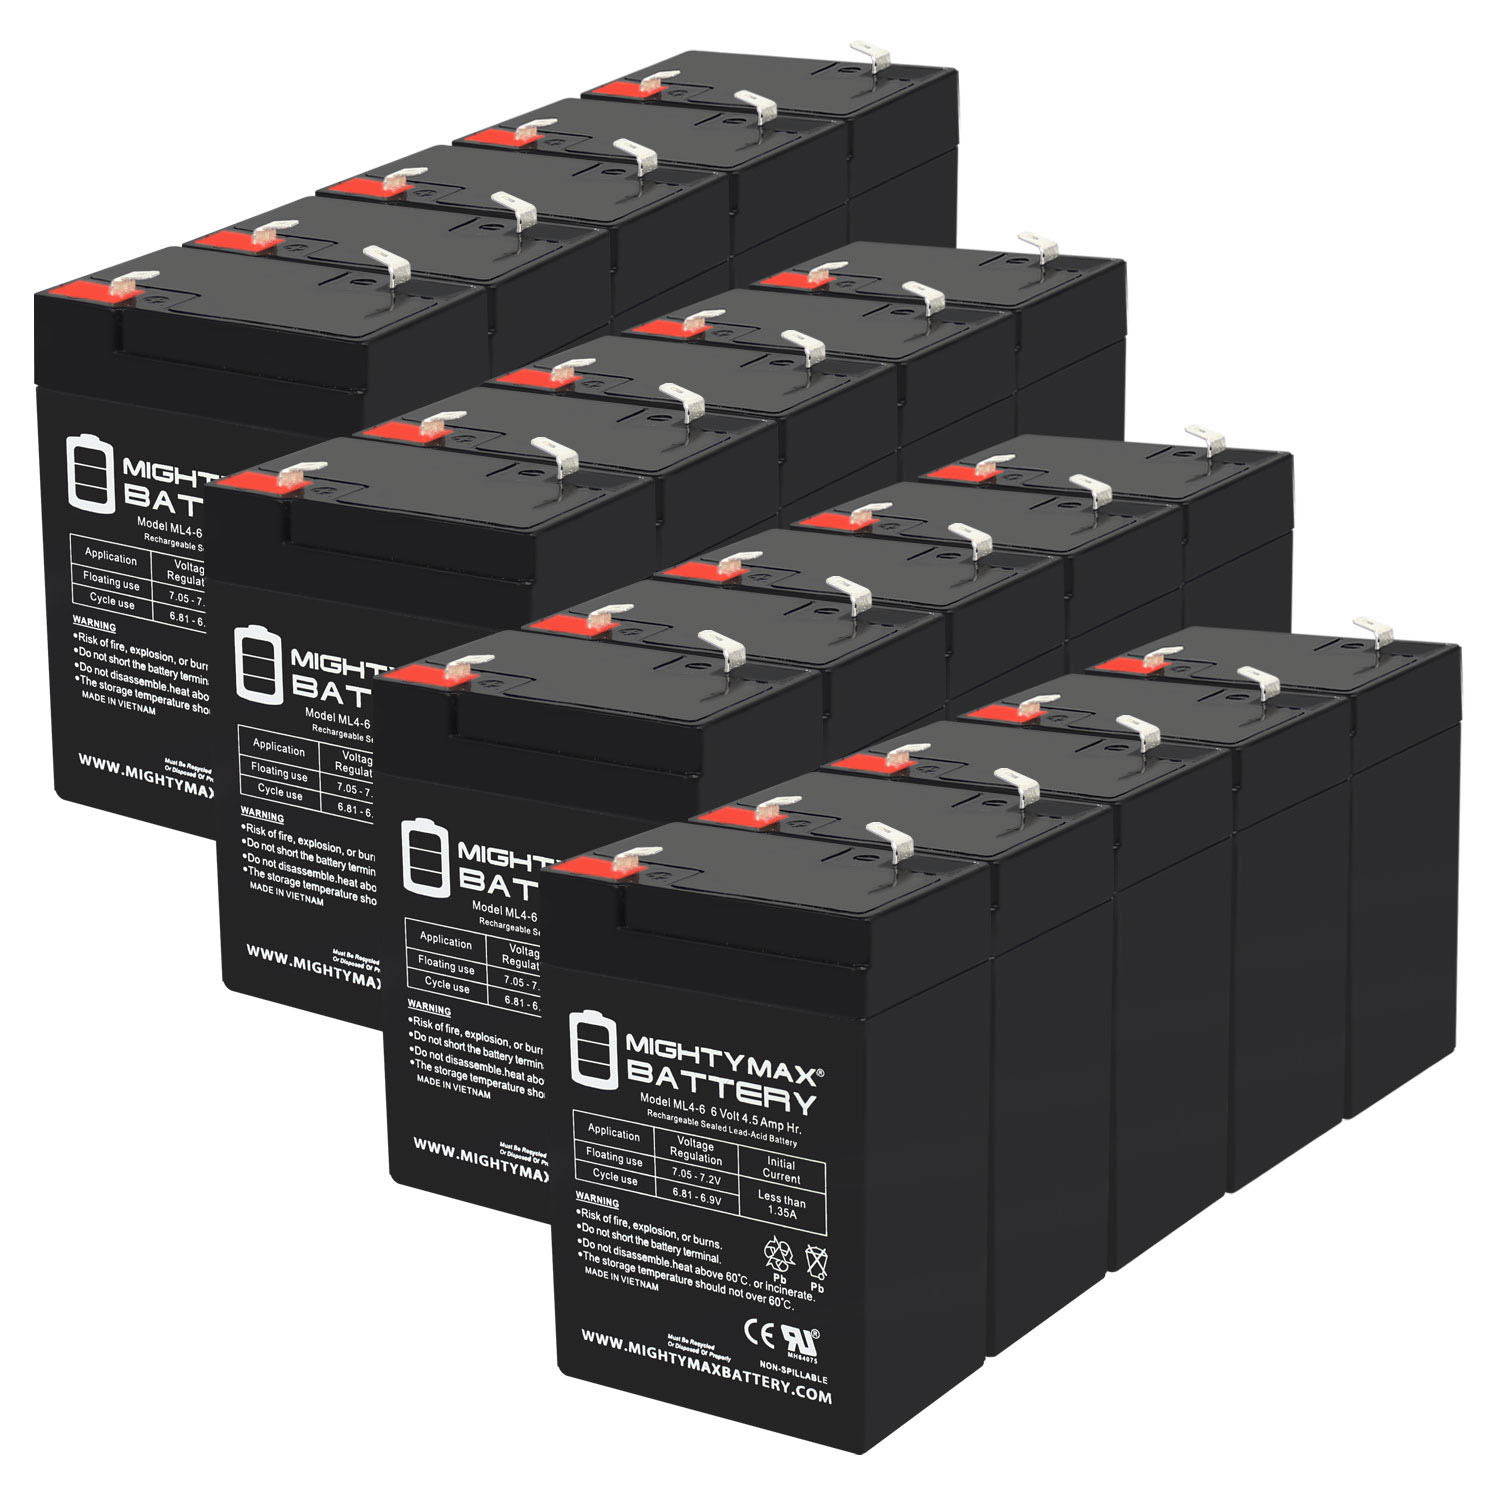 6V 4.5AH SLA Replacement Battery for Chloride Cel - 20 Pack